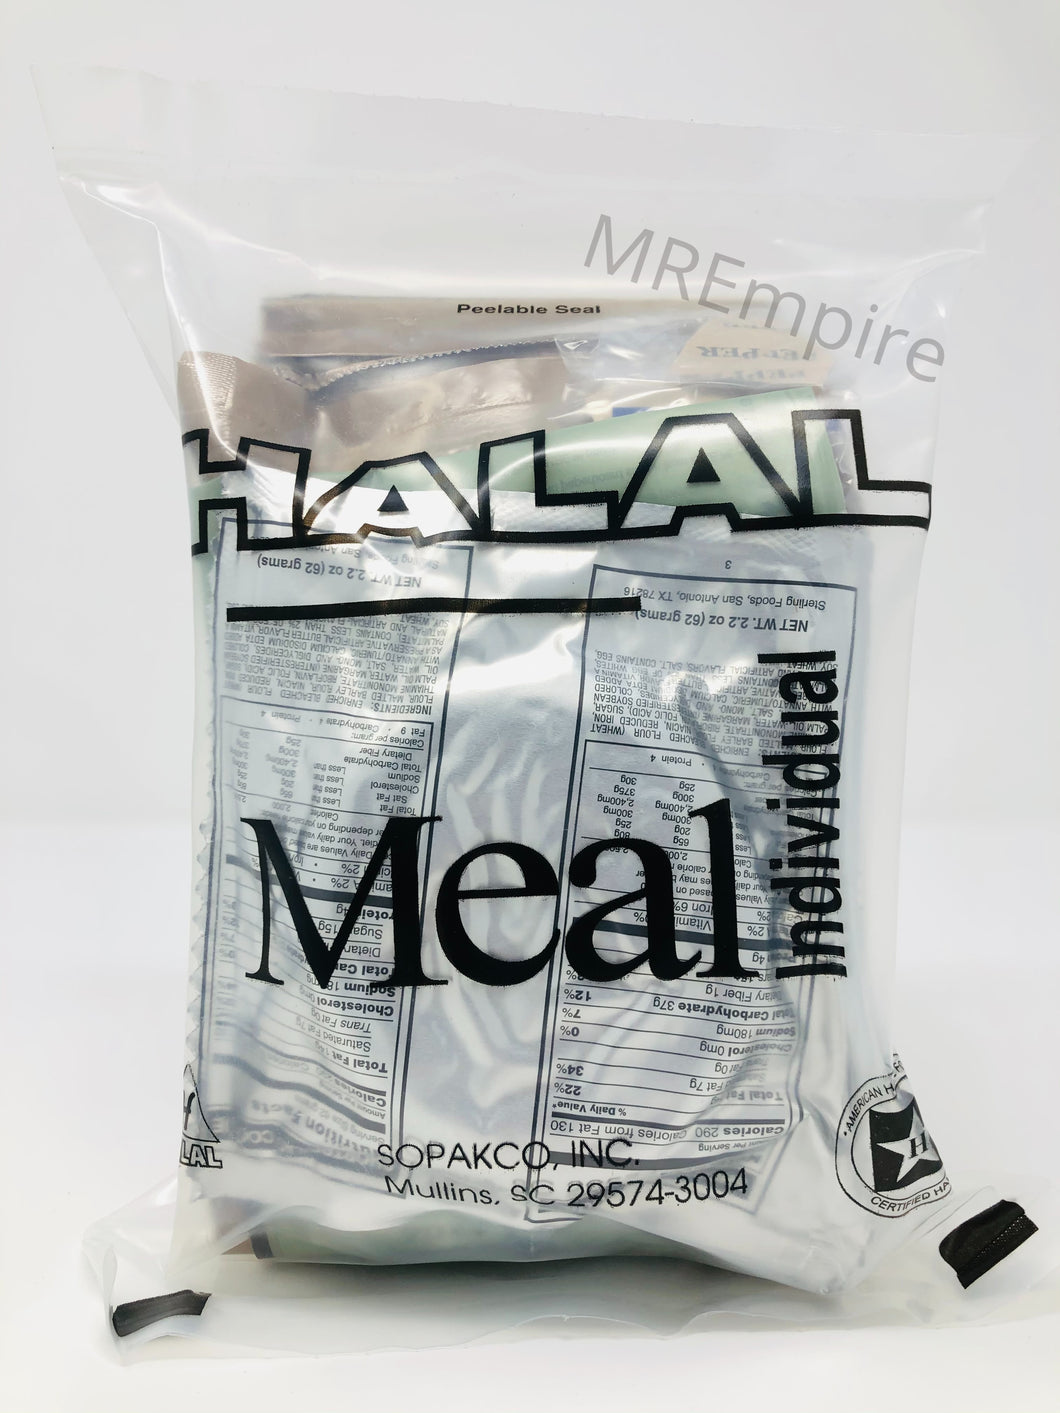 USA HALAL MRE Military Meal-Ready-to-Eat ration